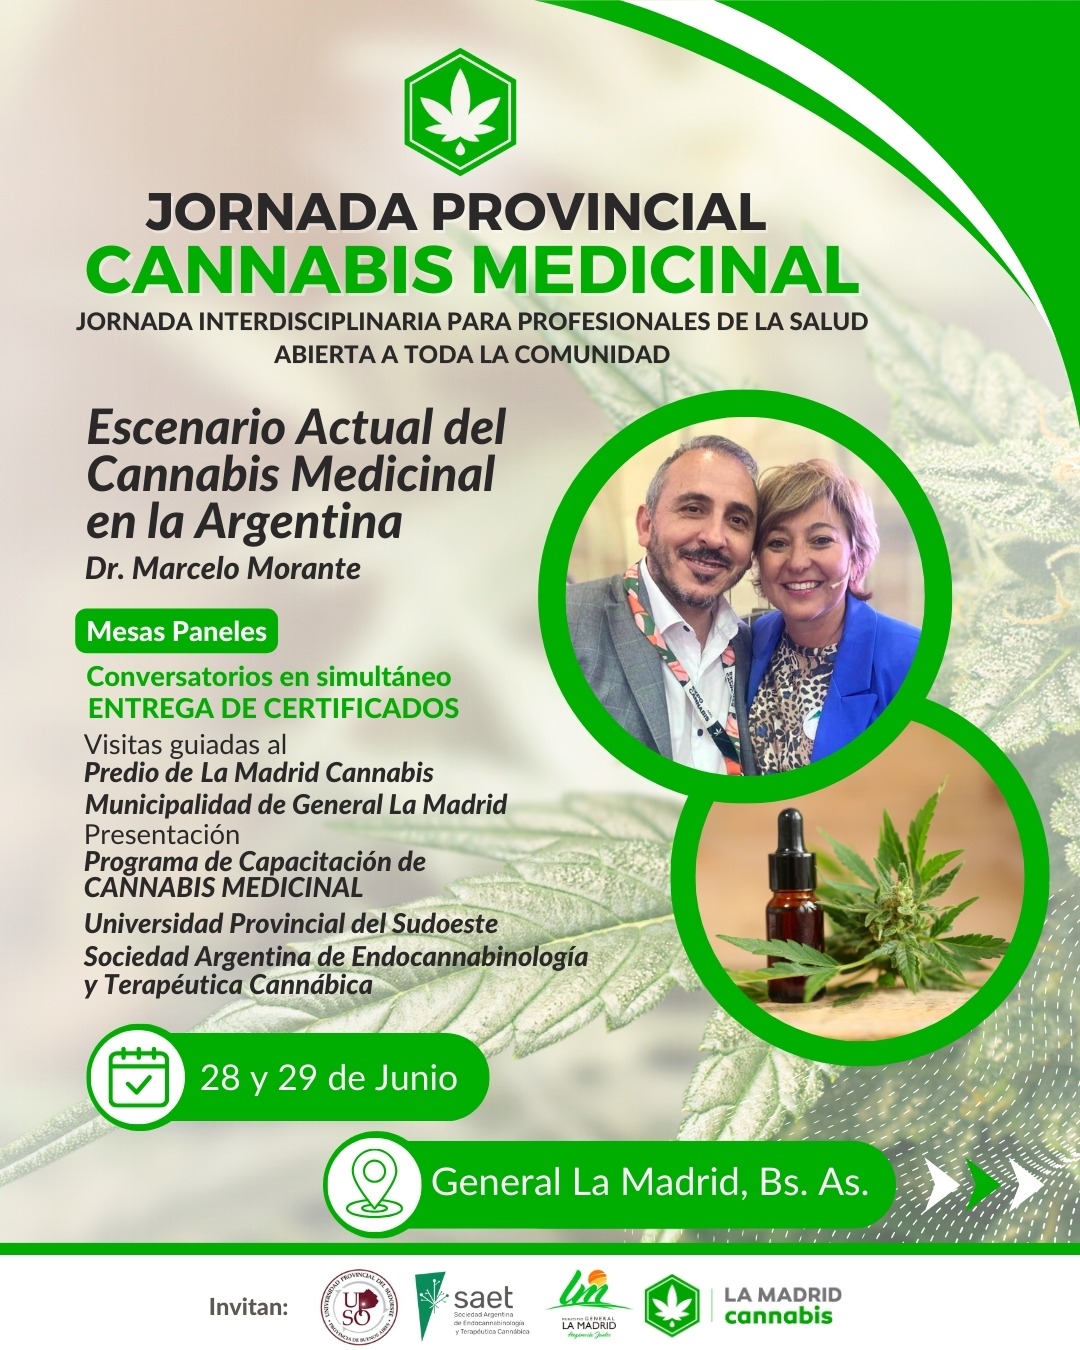 Jornada Provincial de Cannabis Medicinal en General La Madrid